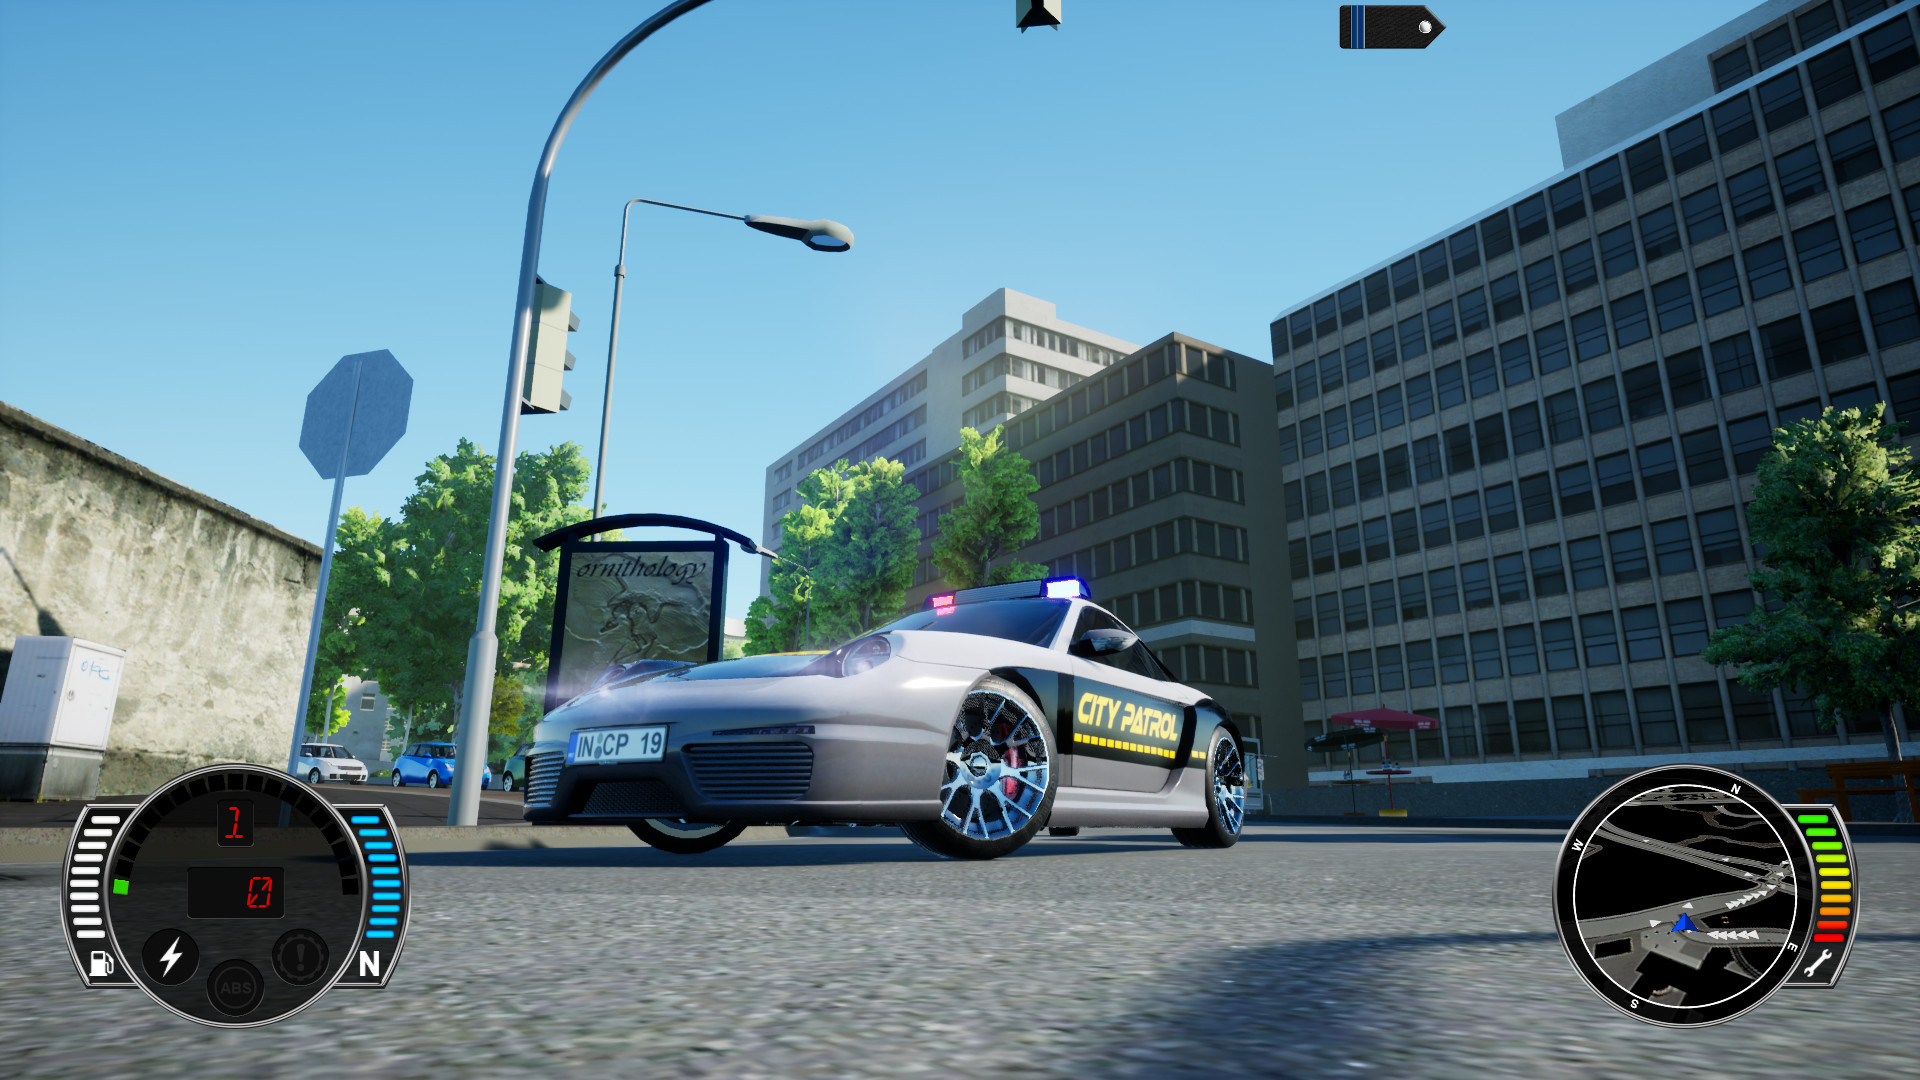 City Patrol: Police screenshot